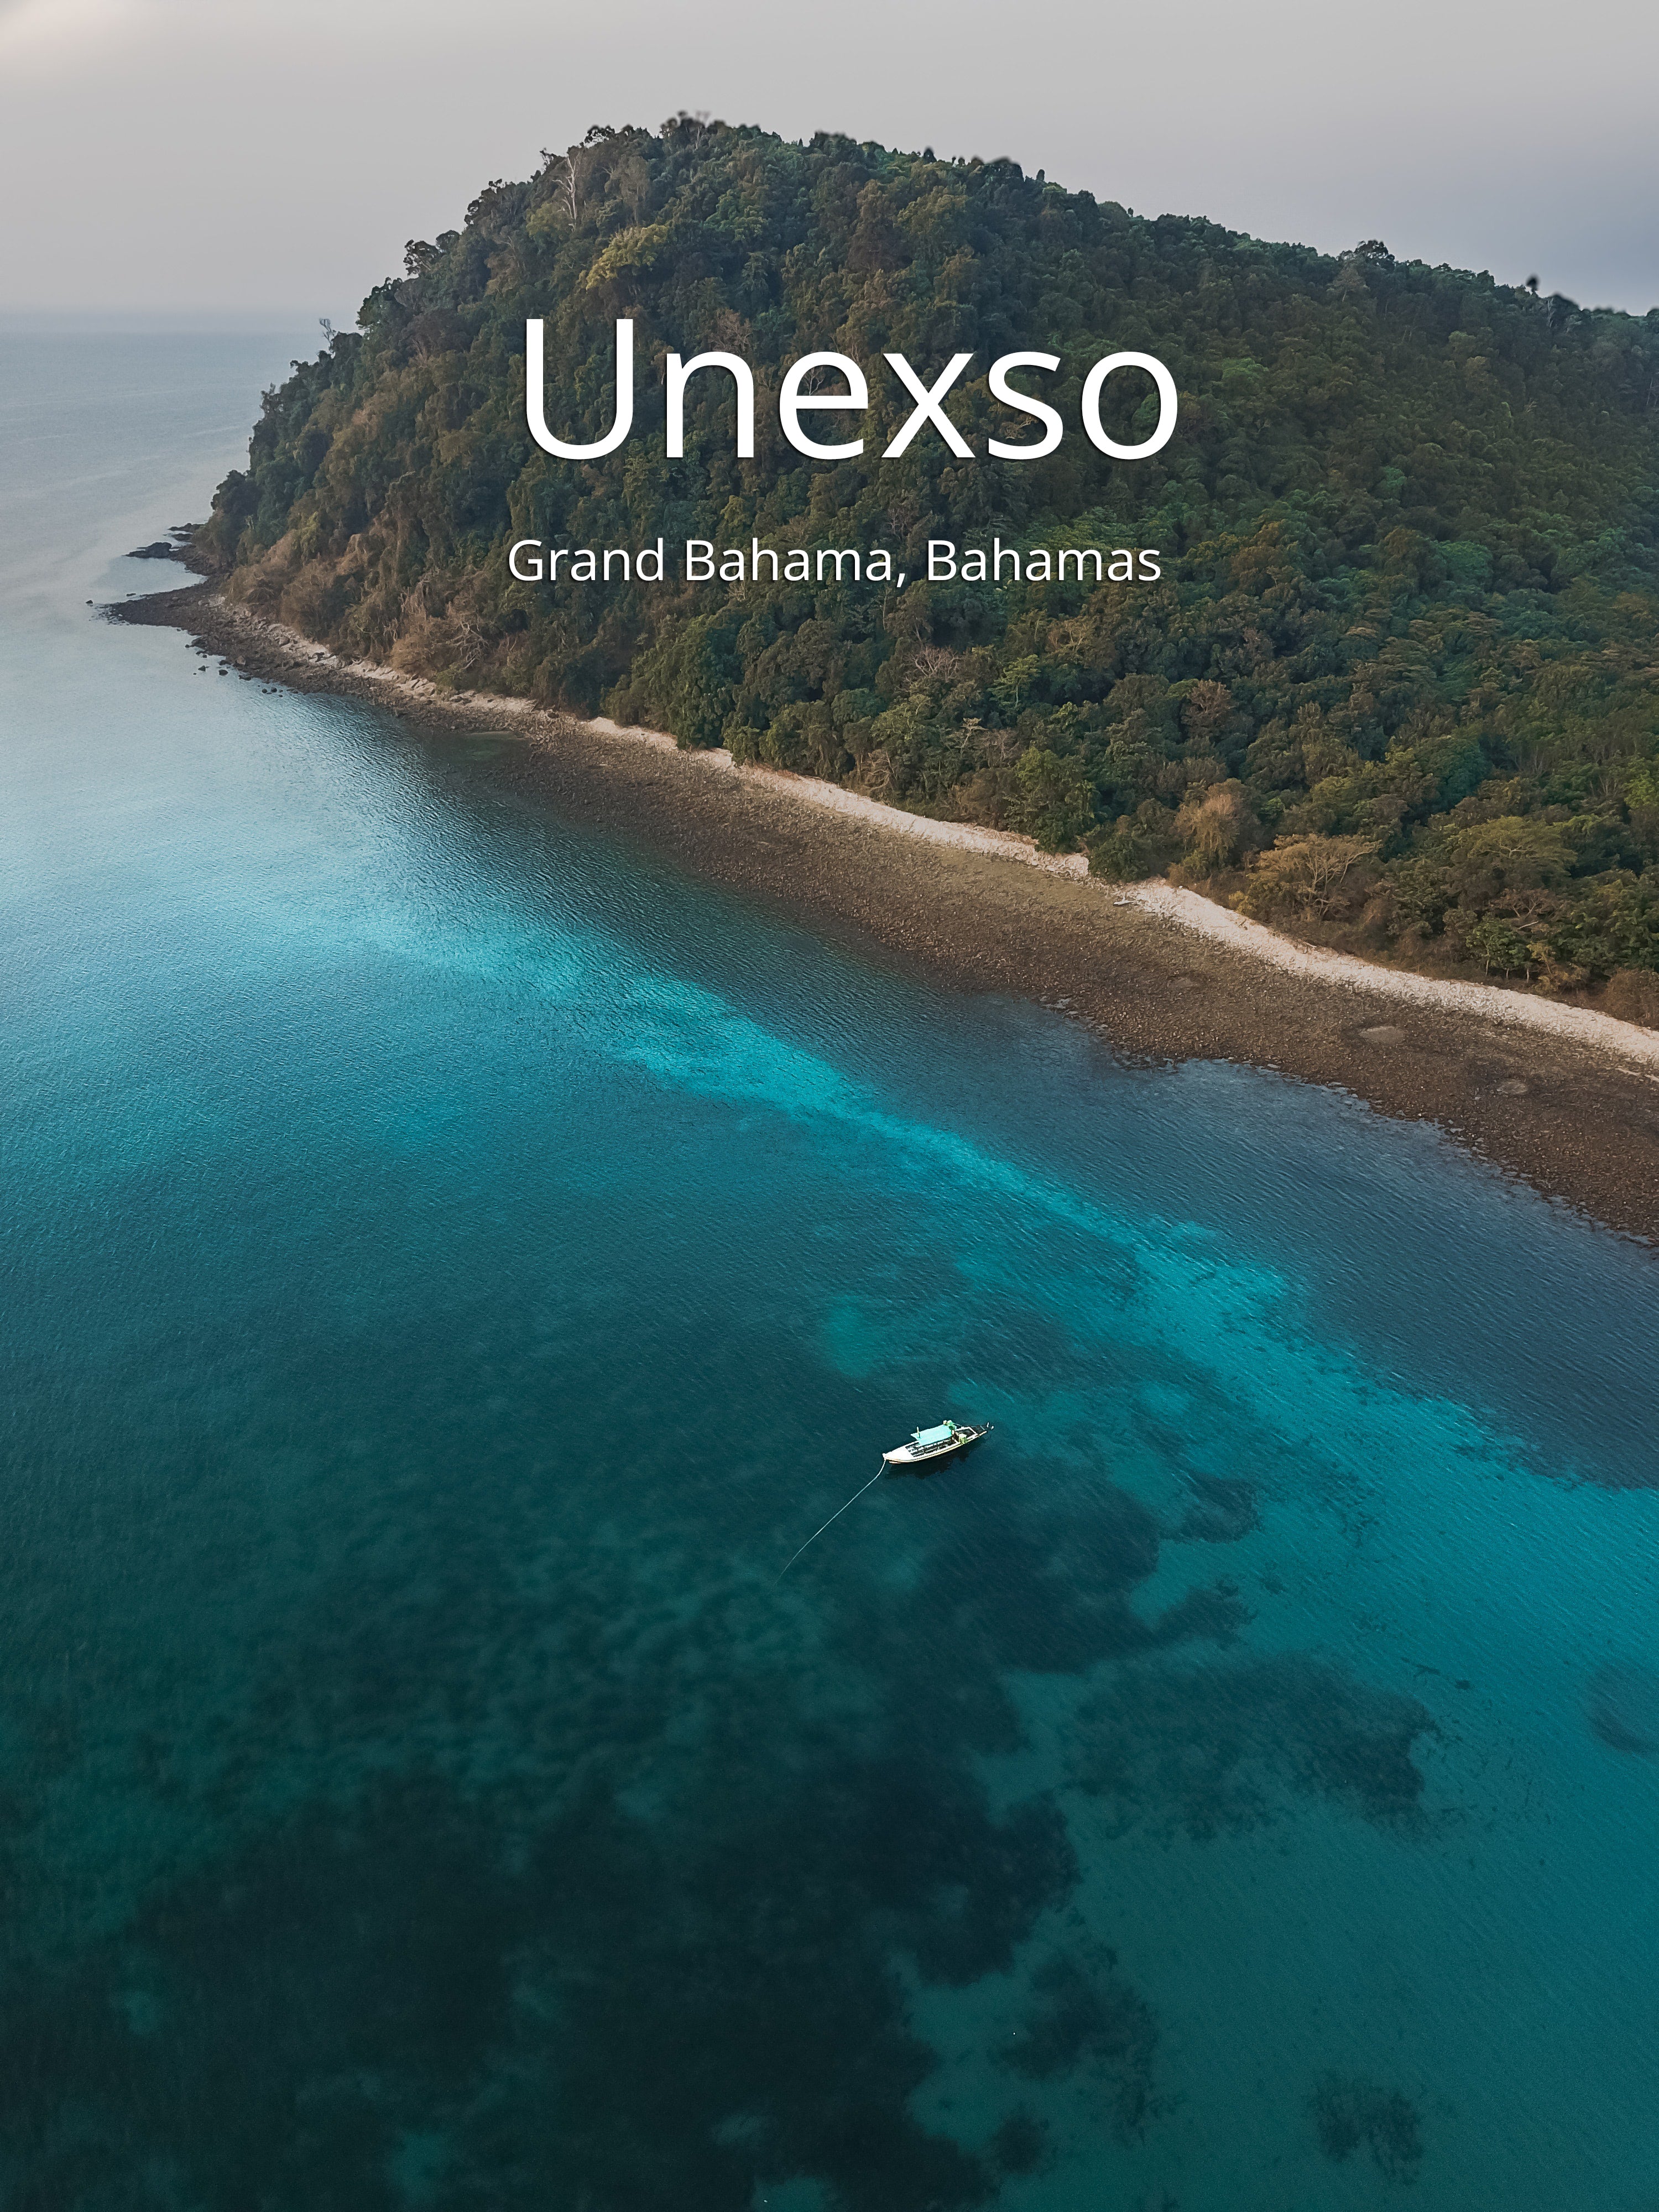 Unexso Grand Bahama The Scuba Directory